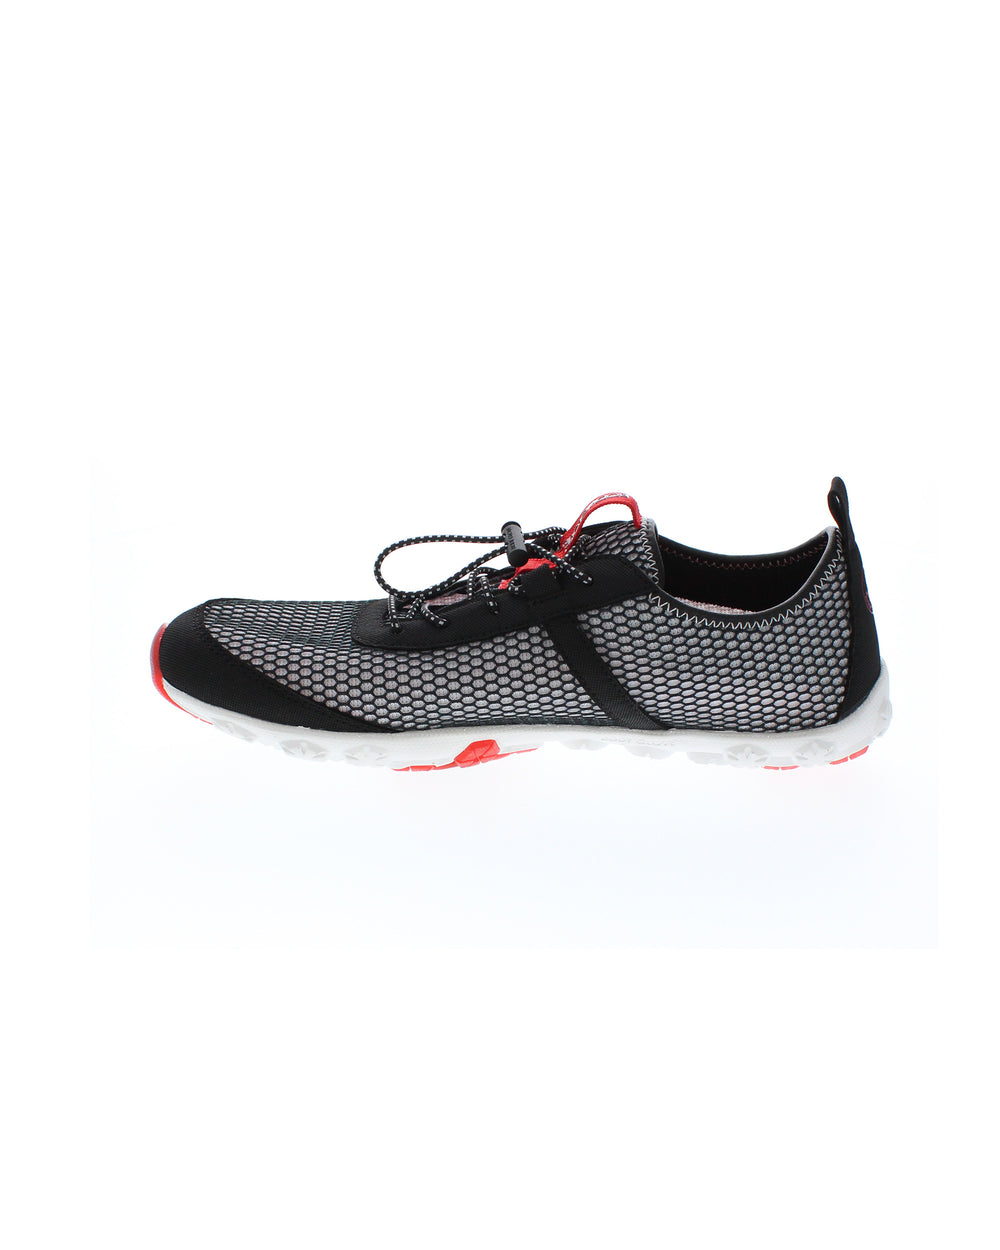 Men's Flux Water Shoes - Black/Red